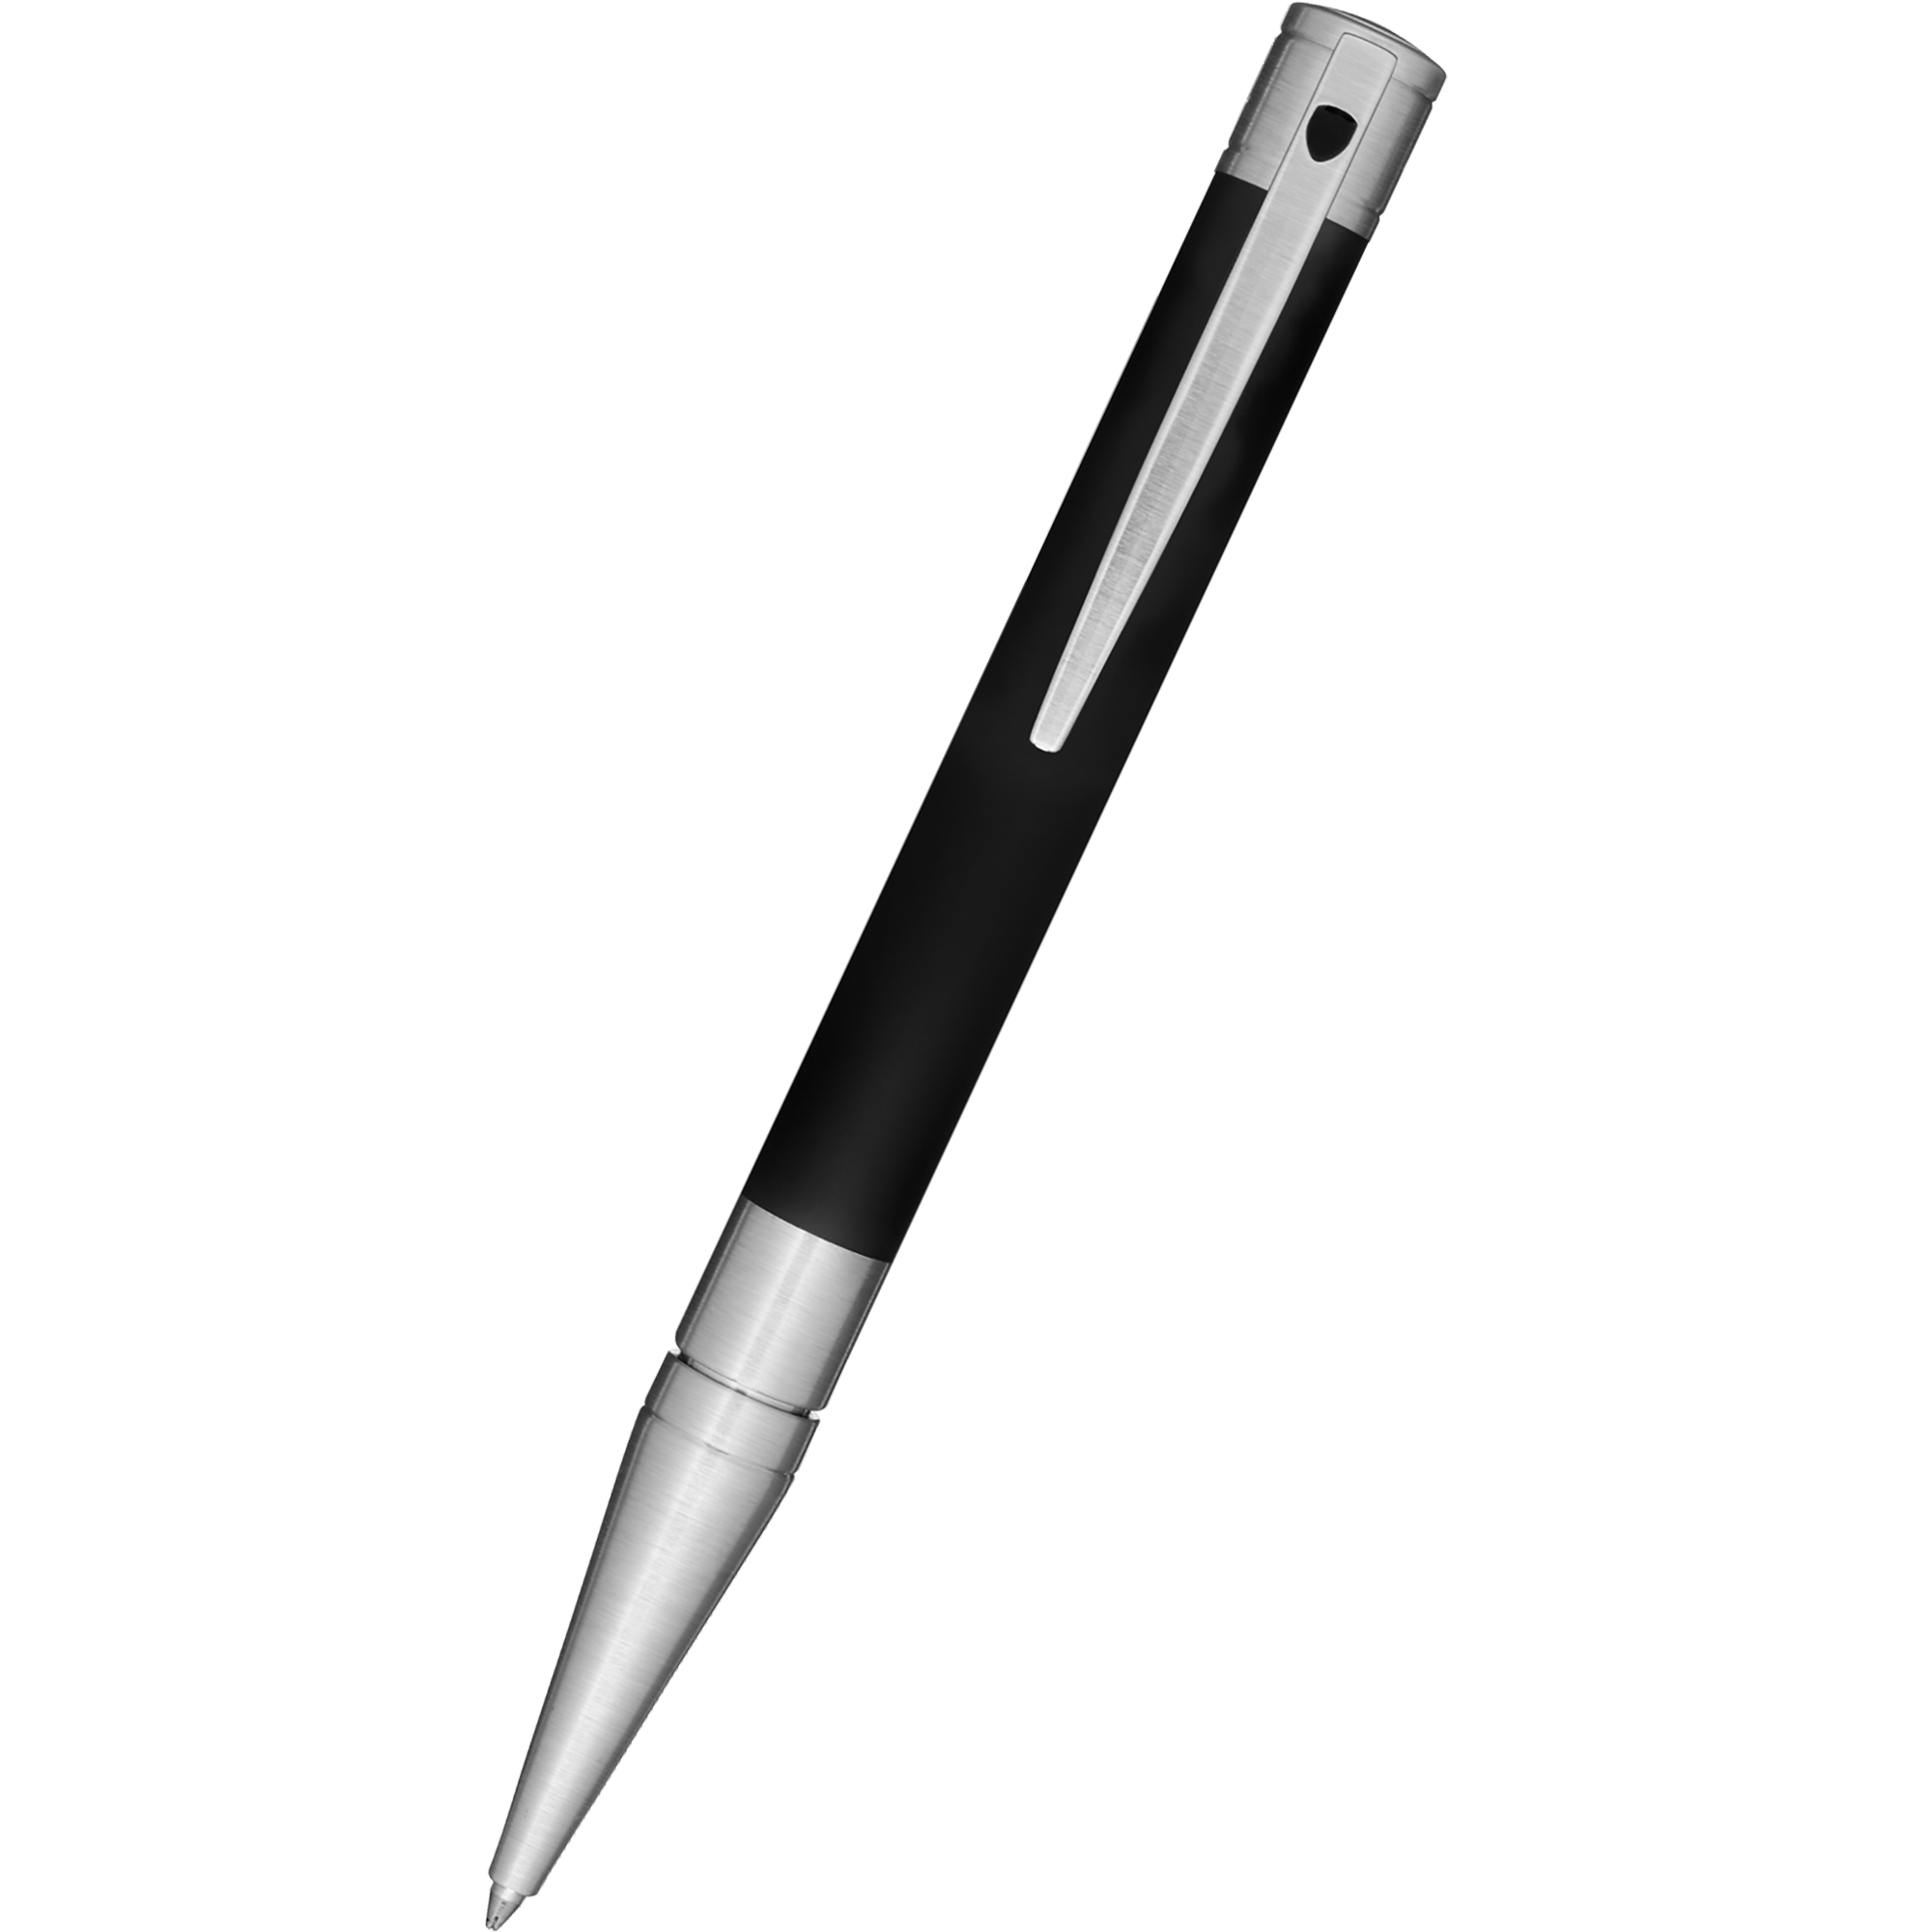 S T Dupont D-Initial Ballpoint Pen - Matt Black-Pen Boutique Ltd